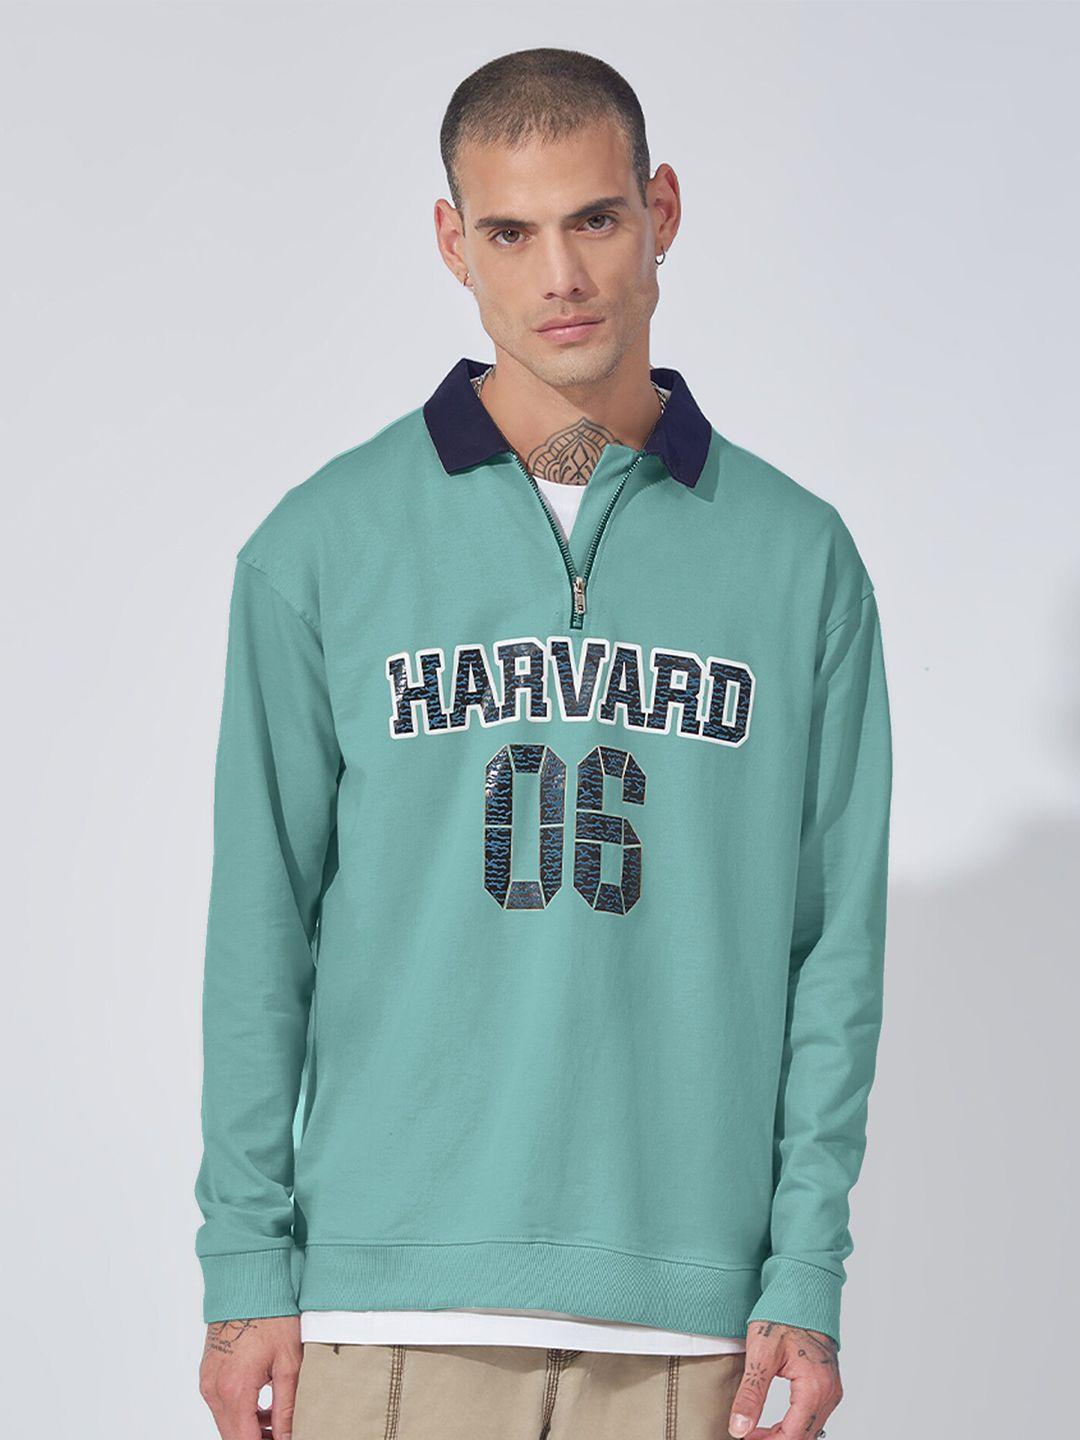 maniac-alphanumeric-printed-polo-collar-long-sleeves-zip-detail-cotton-pullover-sweatshirt